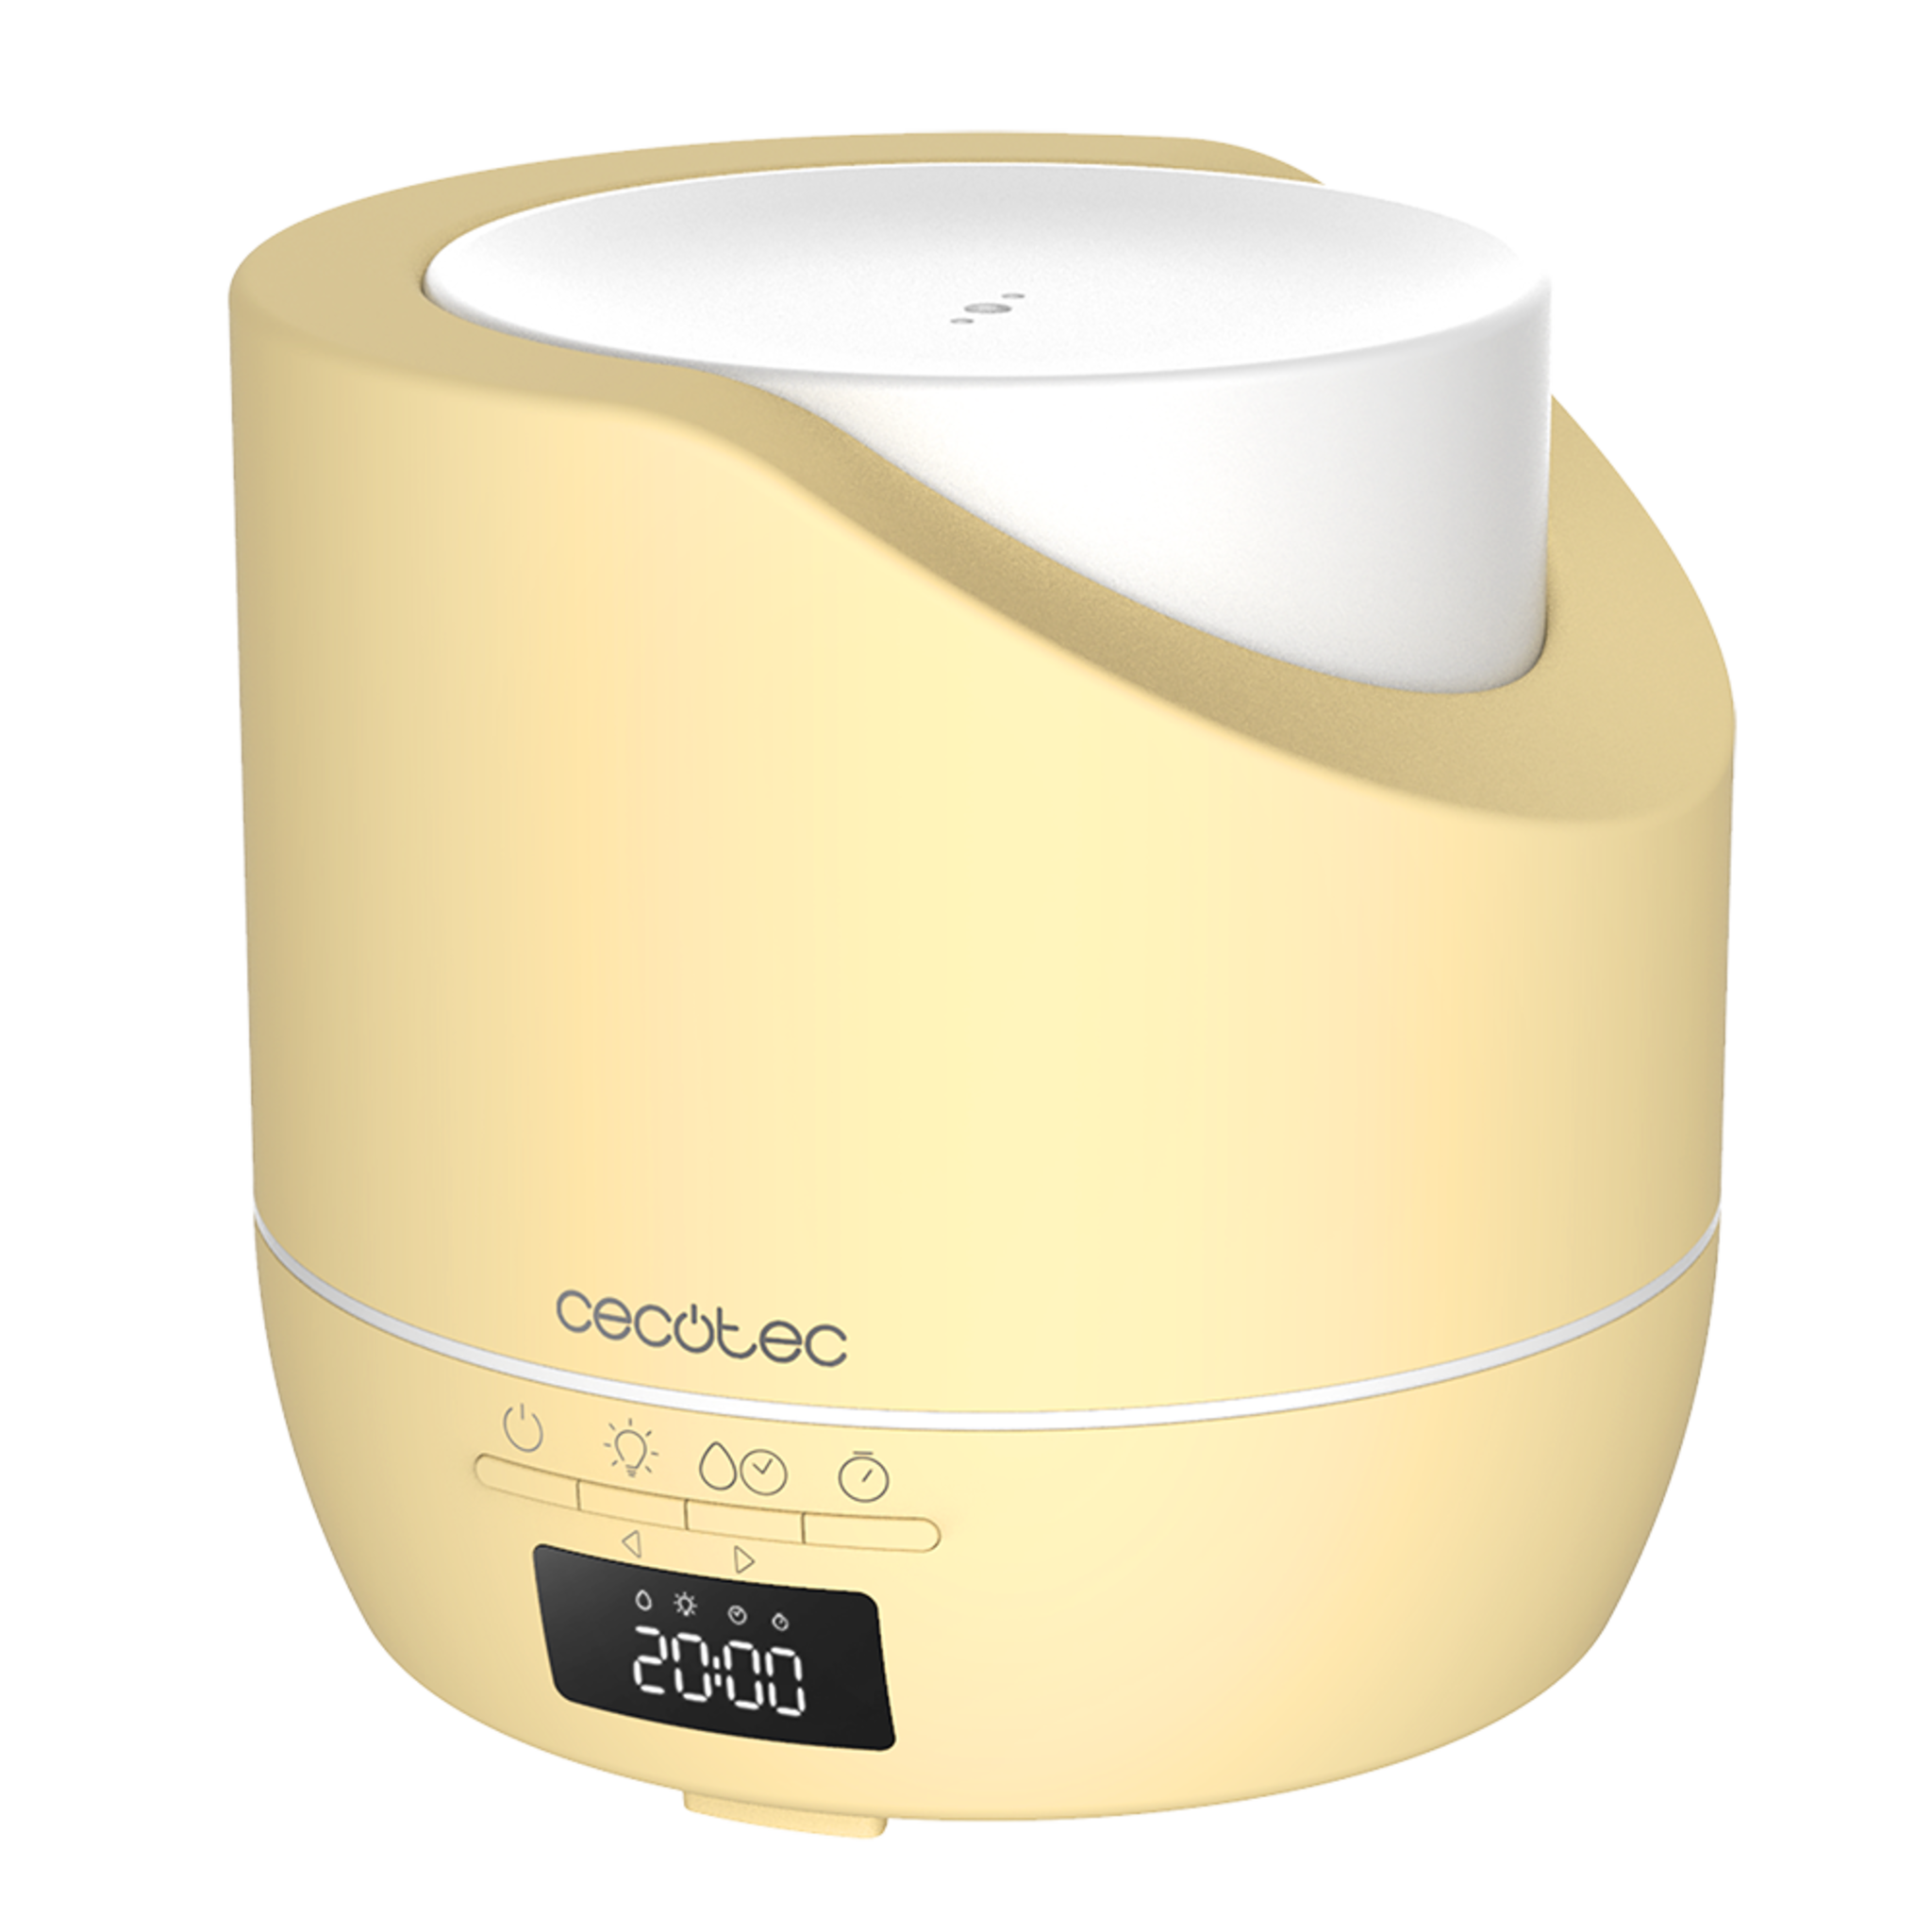 Difusor de aroma PureAroma 500 Smart SunLight. Capacidad 500ml, Pantalla LED, Temporizador 12h, Despertador, 3 Modos de funcionamiento, Cobertura 30m2